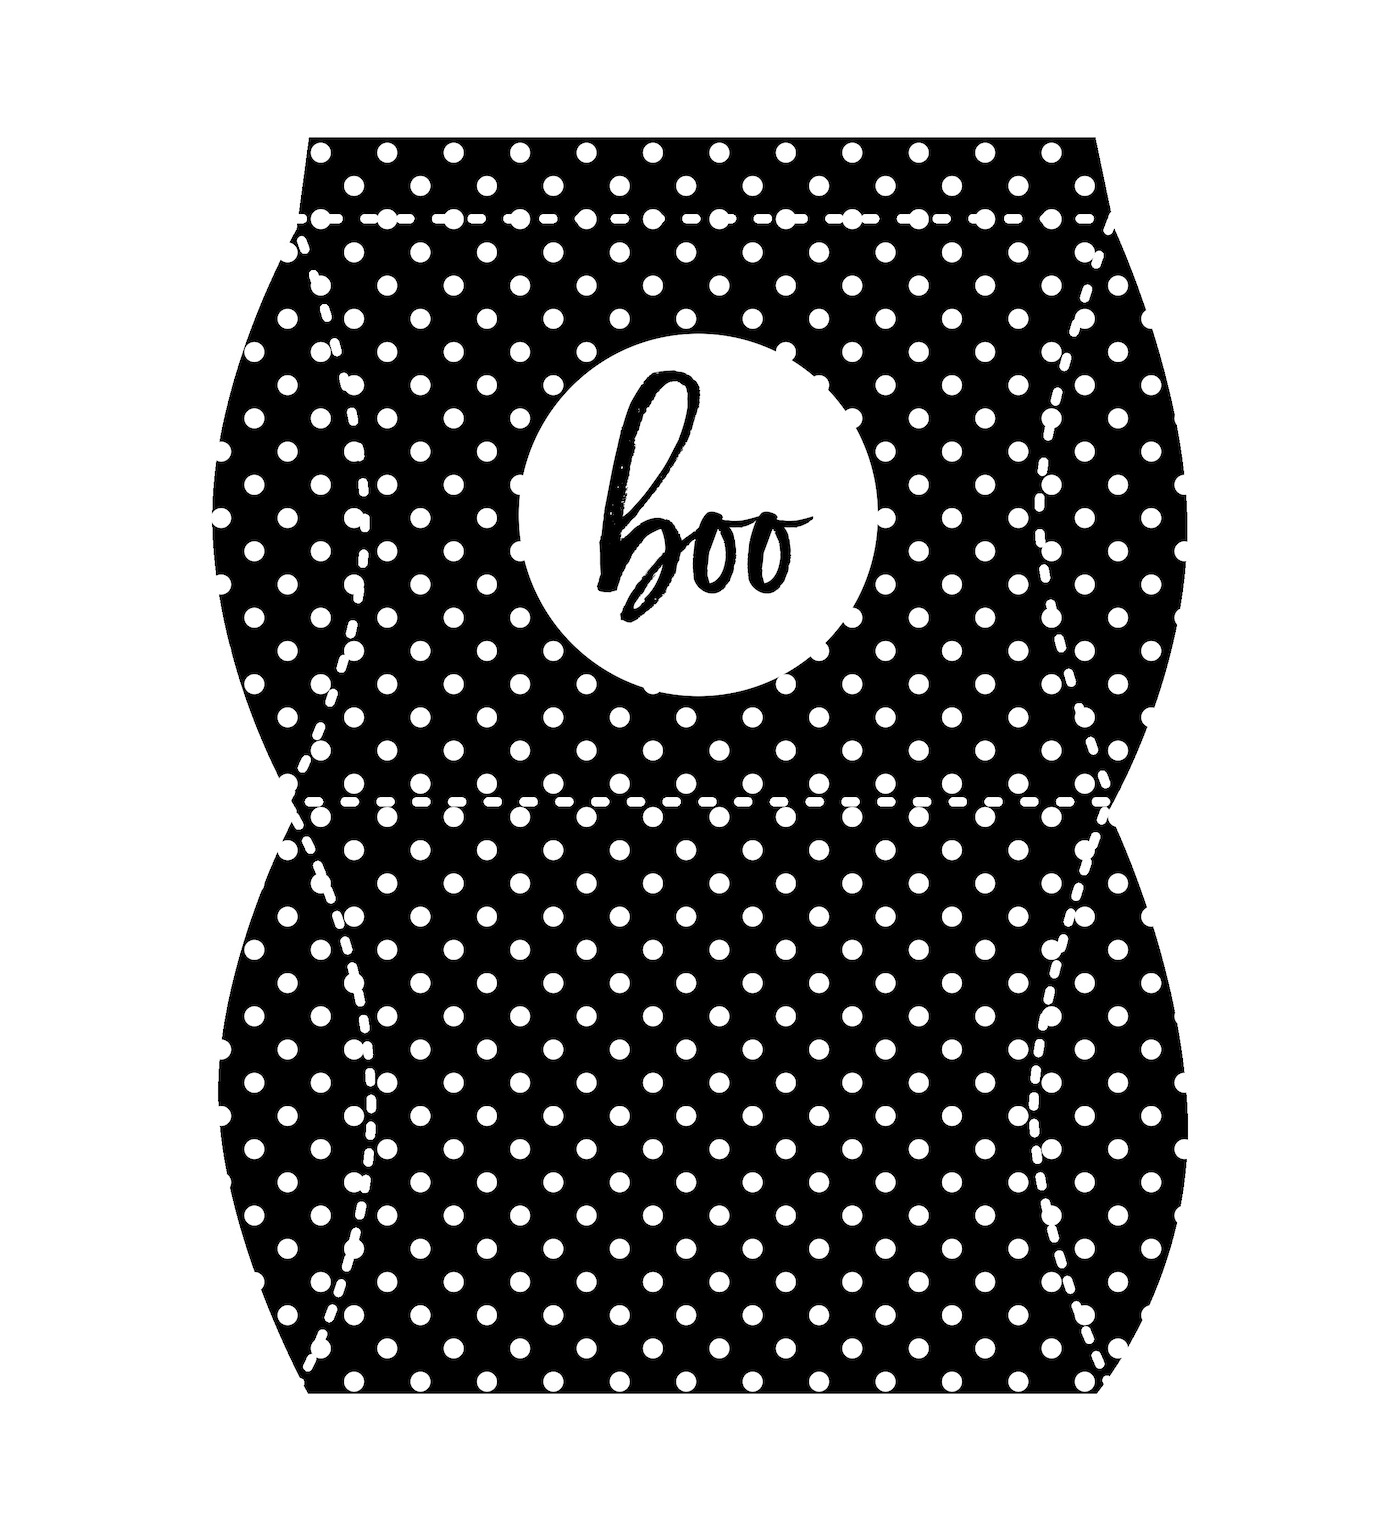 Free printable Halloween treat box with a Boo and polka dot theme